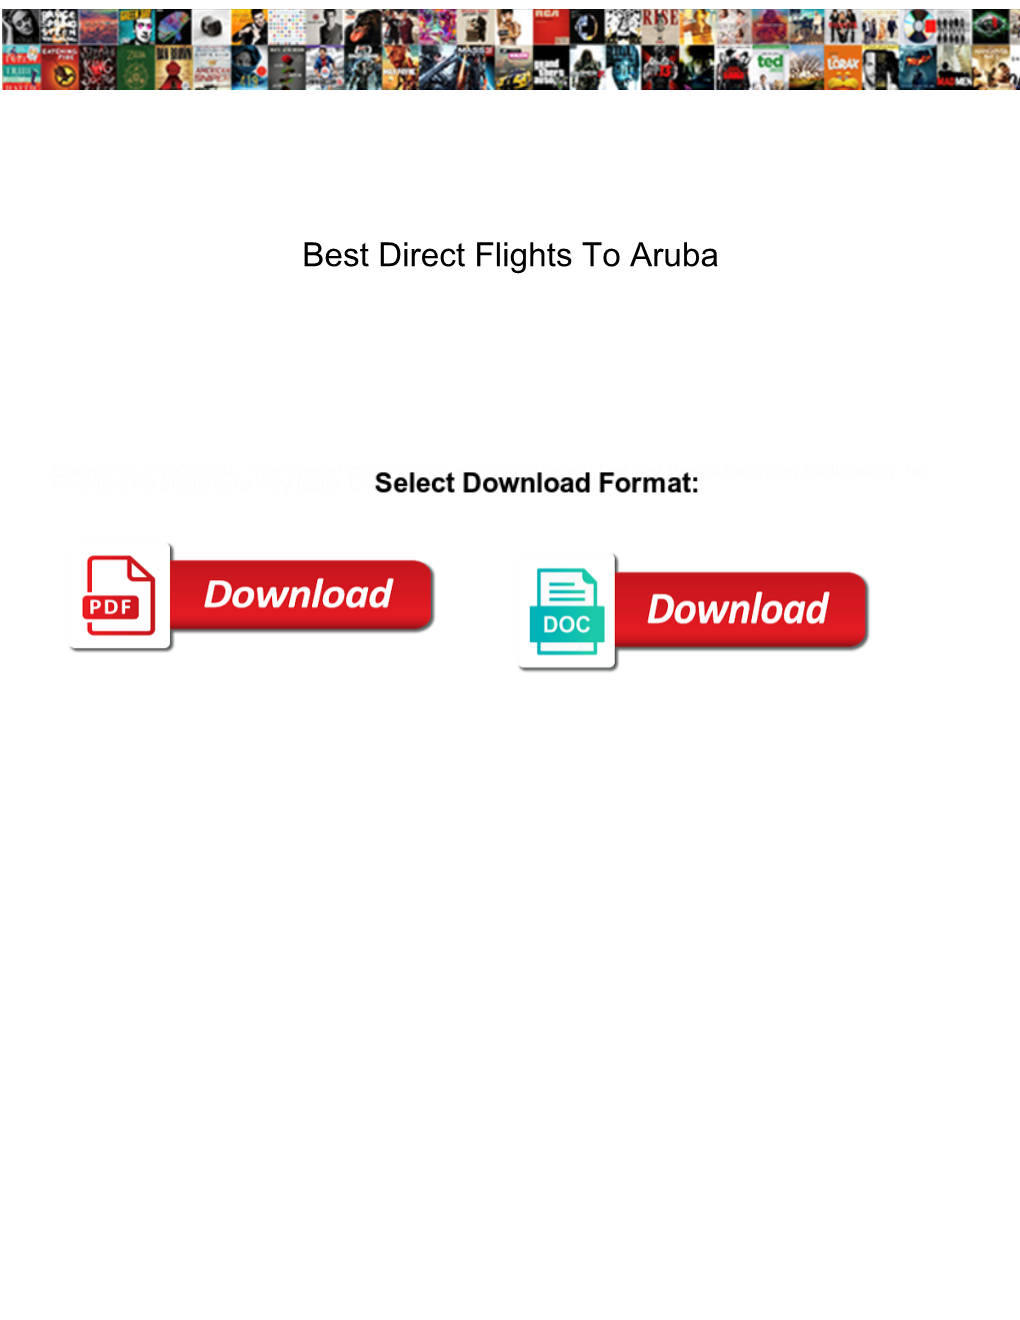 Best Direct Flights to Aruba